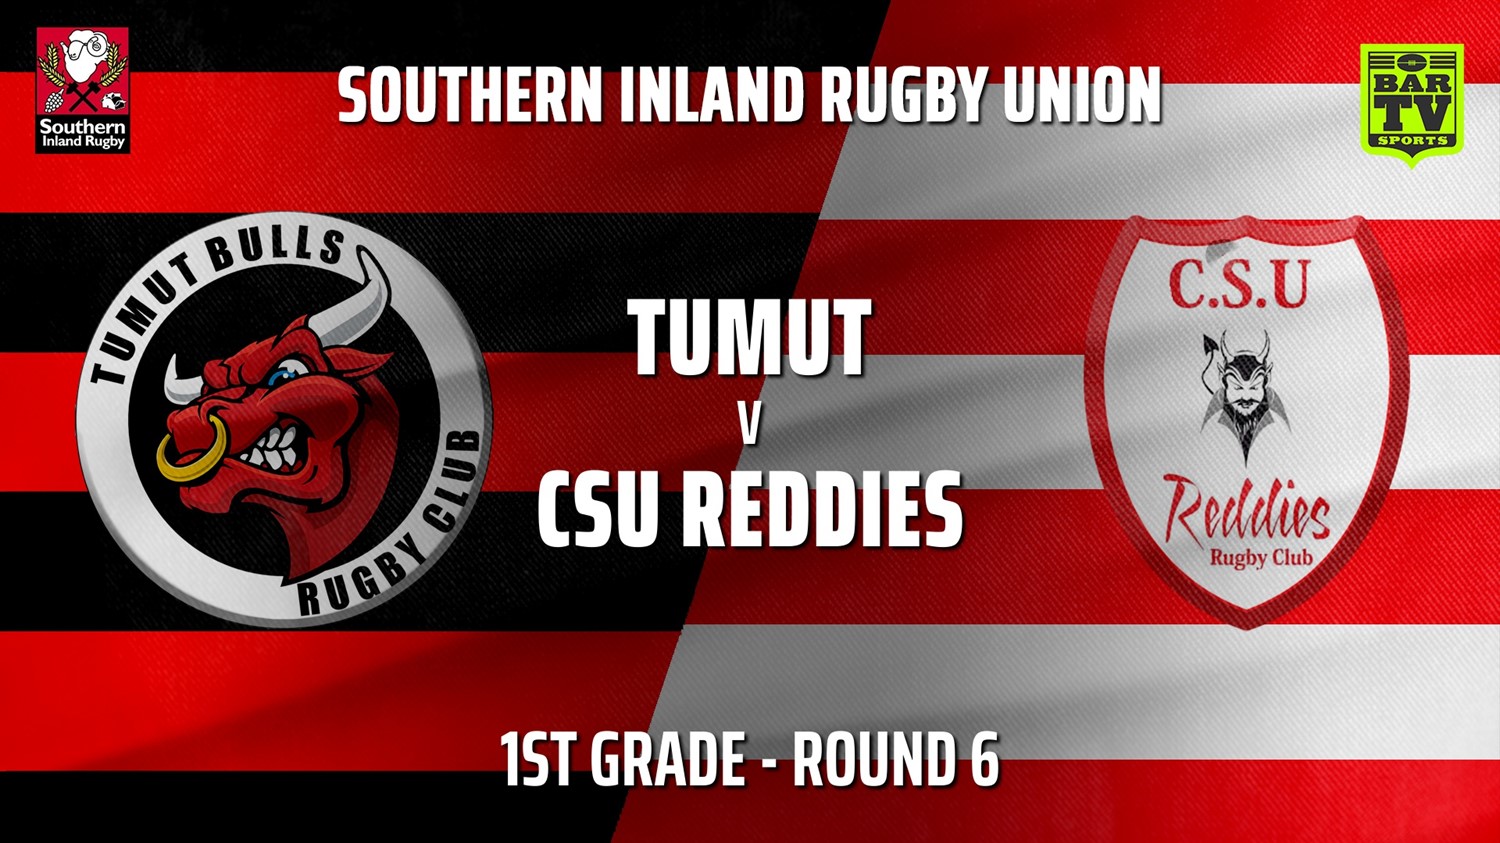 210515-Southern Inland Rugby Union Round 6 - 1st Grade - Tumut Bulls v CSU Reddies Minigame Slate Image